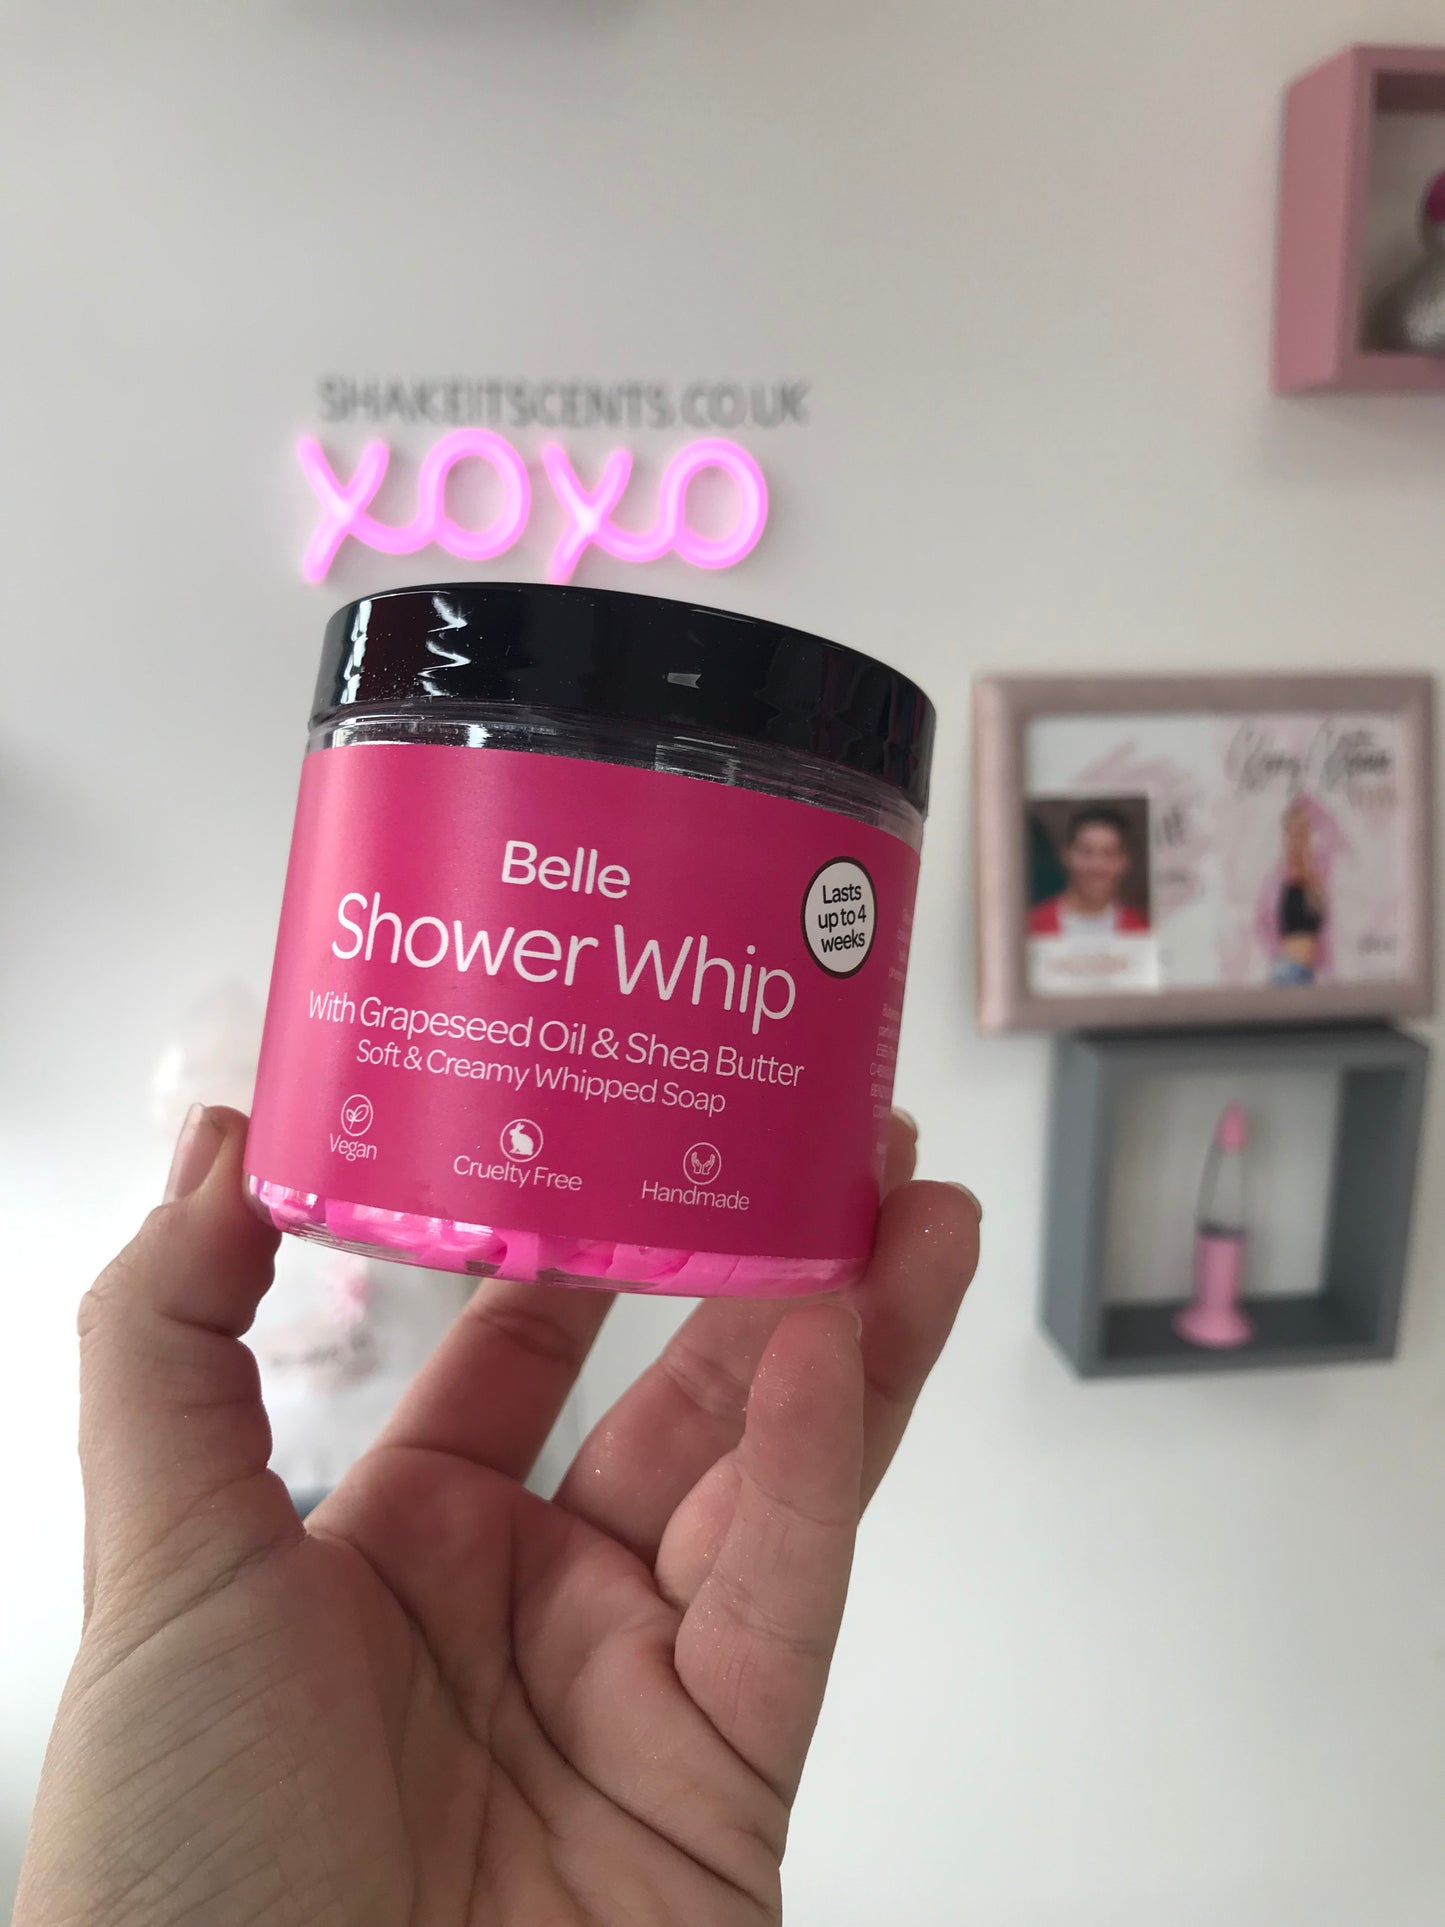 Whipped Soap/ Shower Whips